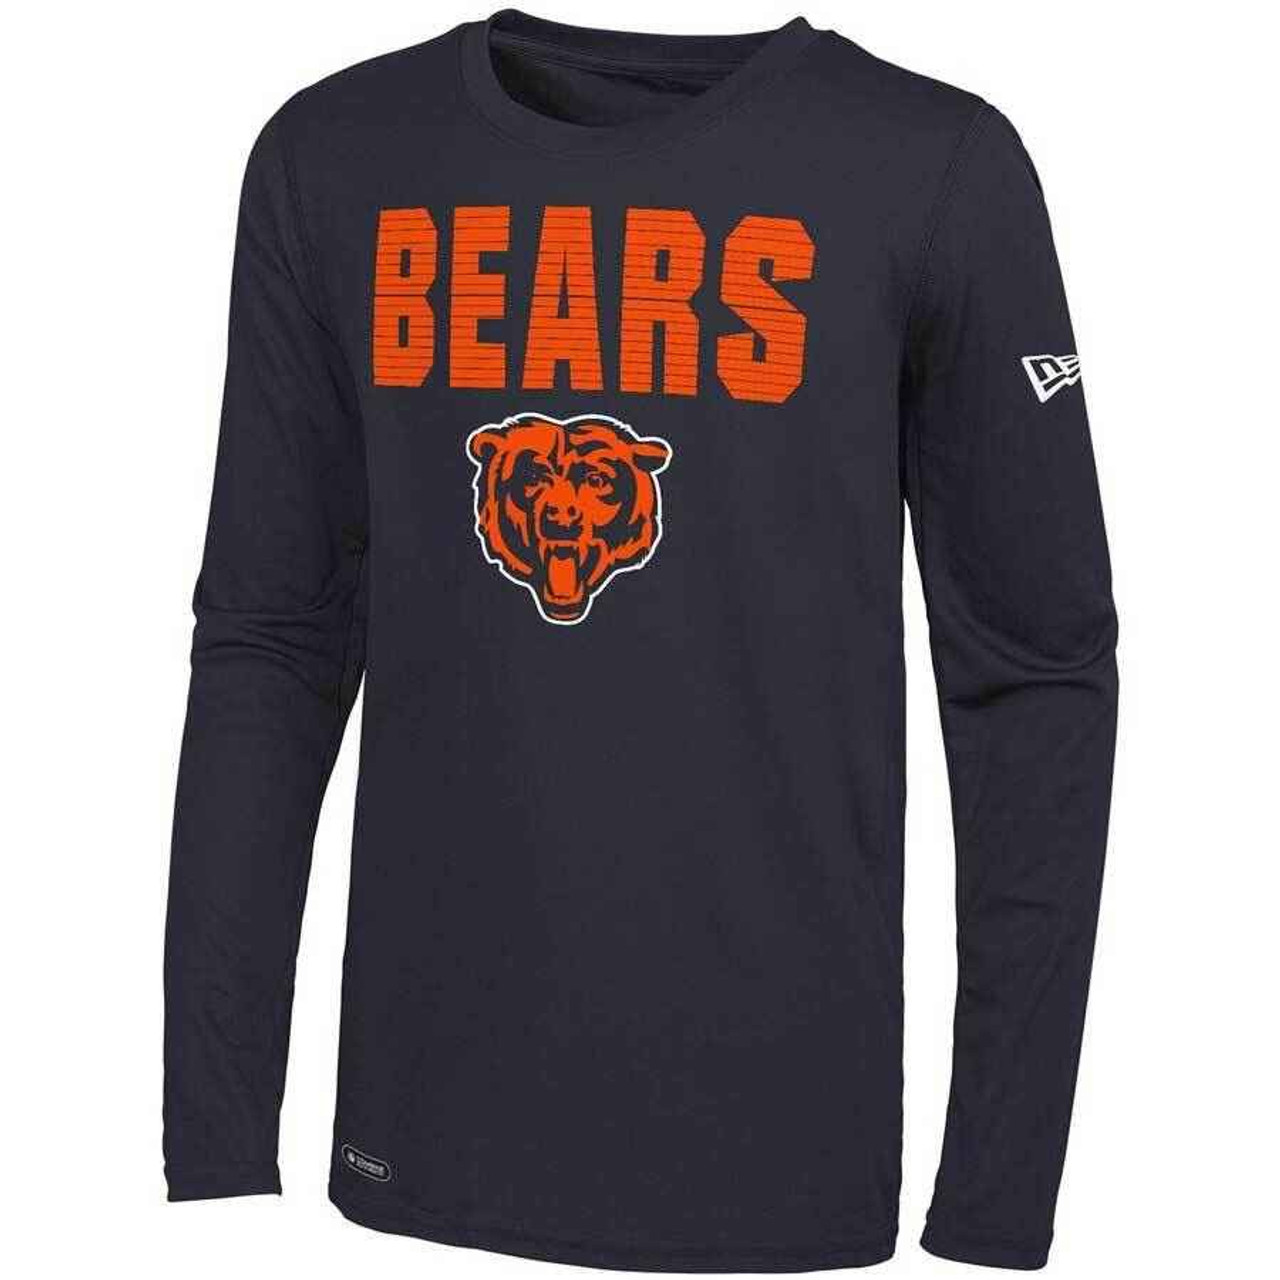 chicago bears long sleeve t shirt